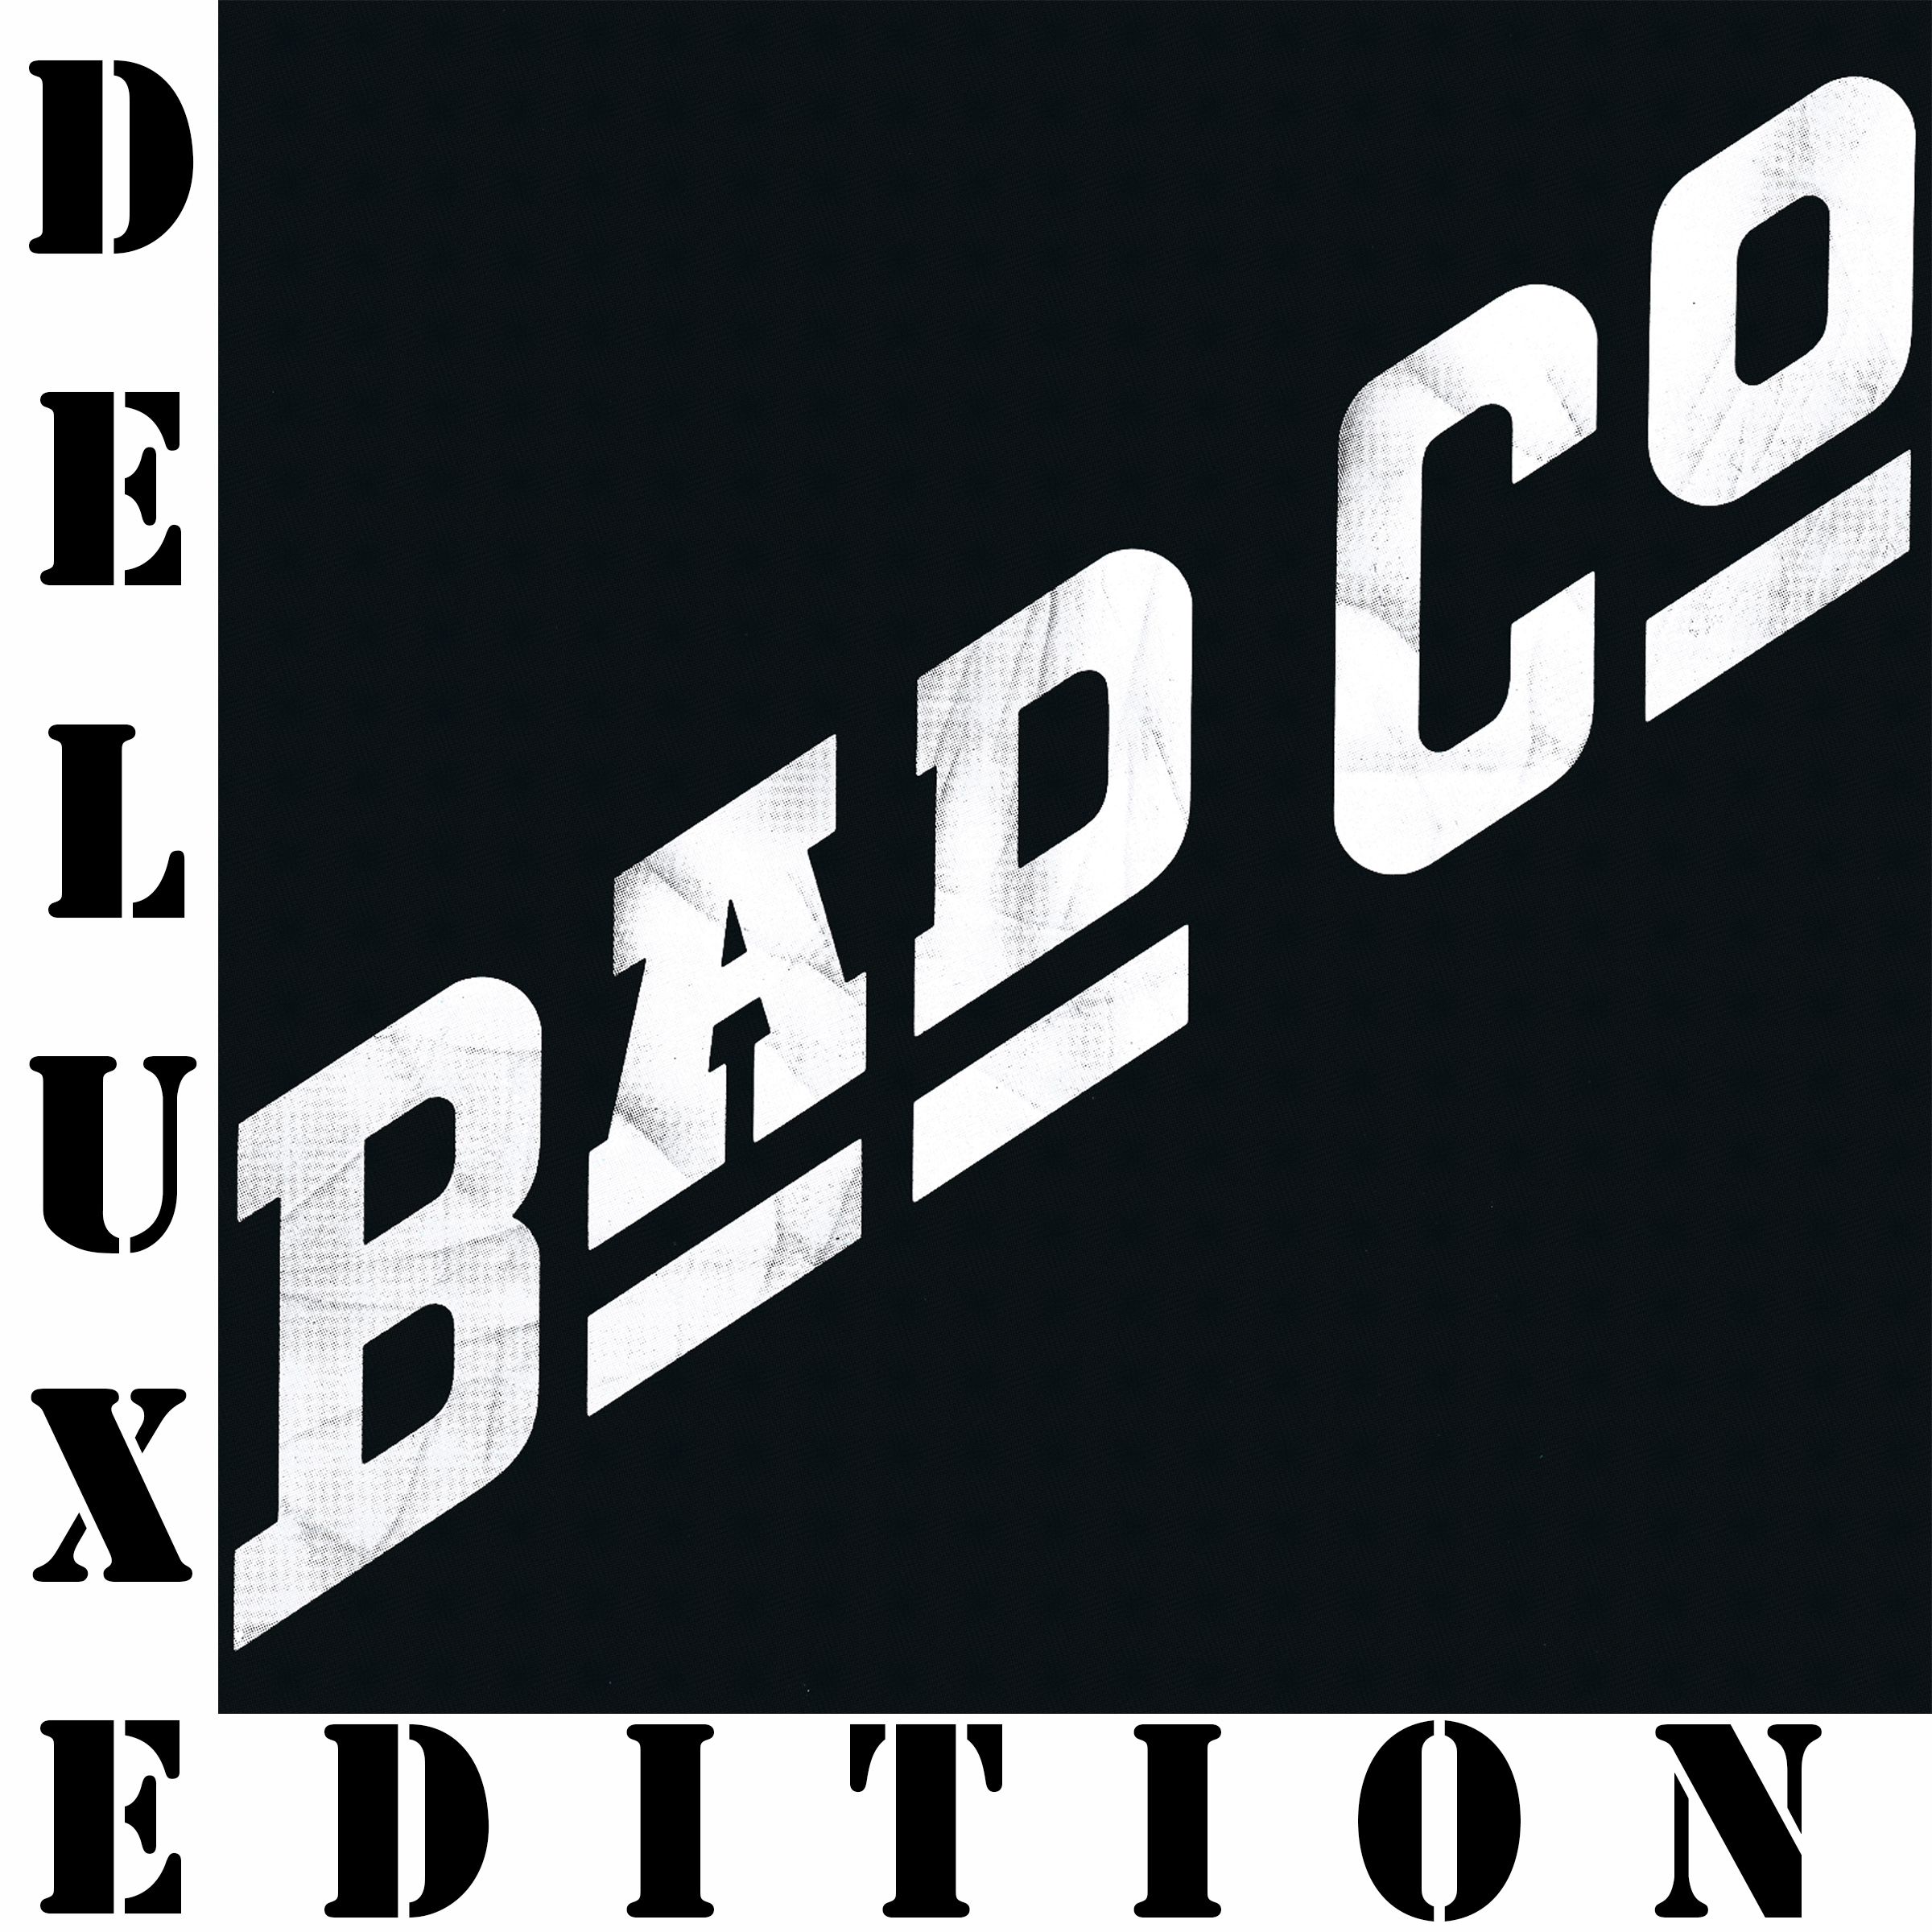 Bad Company (LMS Studio Reel 2-73 Session)